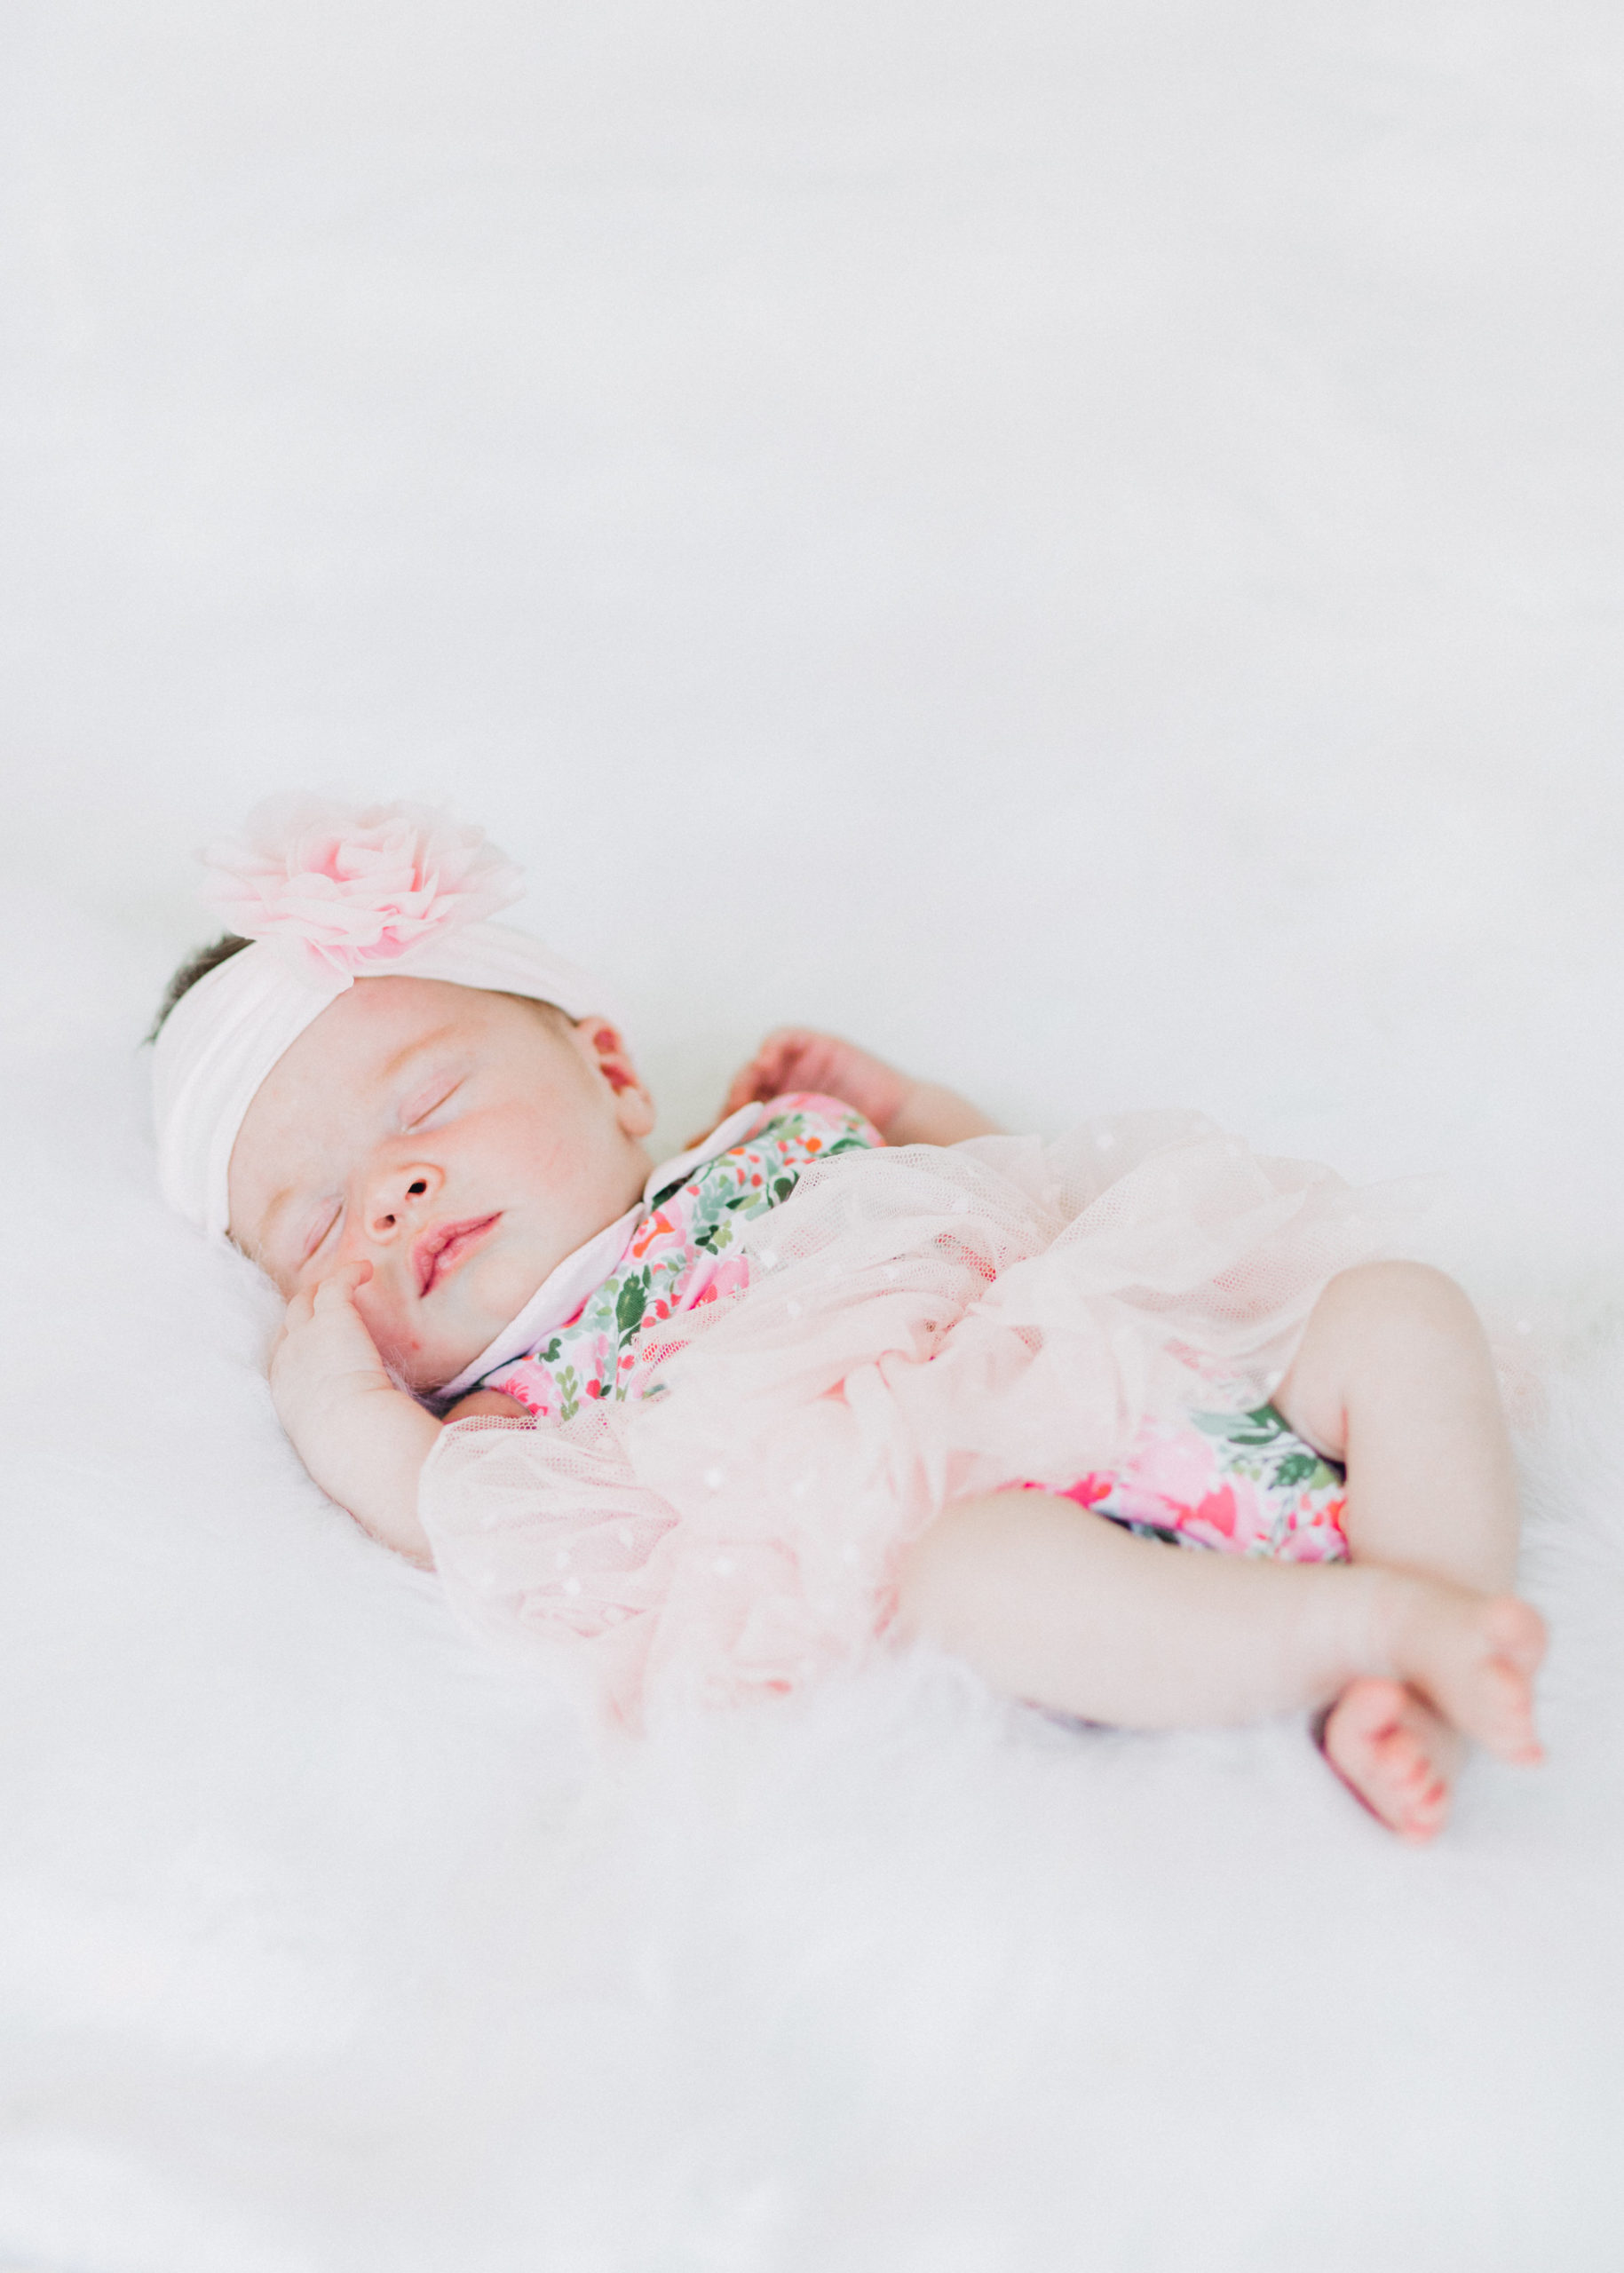 houlton-presque-isle-newborn-photography-blossom-and-pine-media-4592.jpg